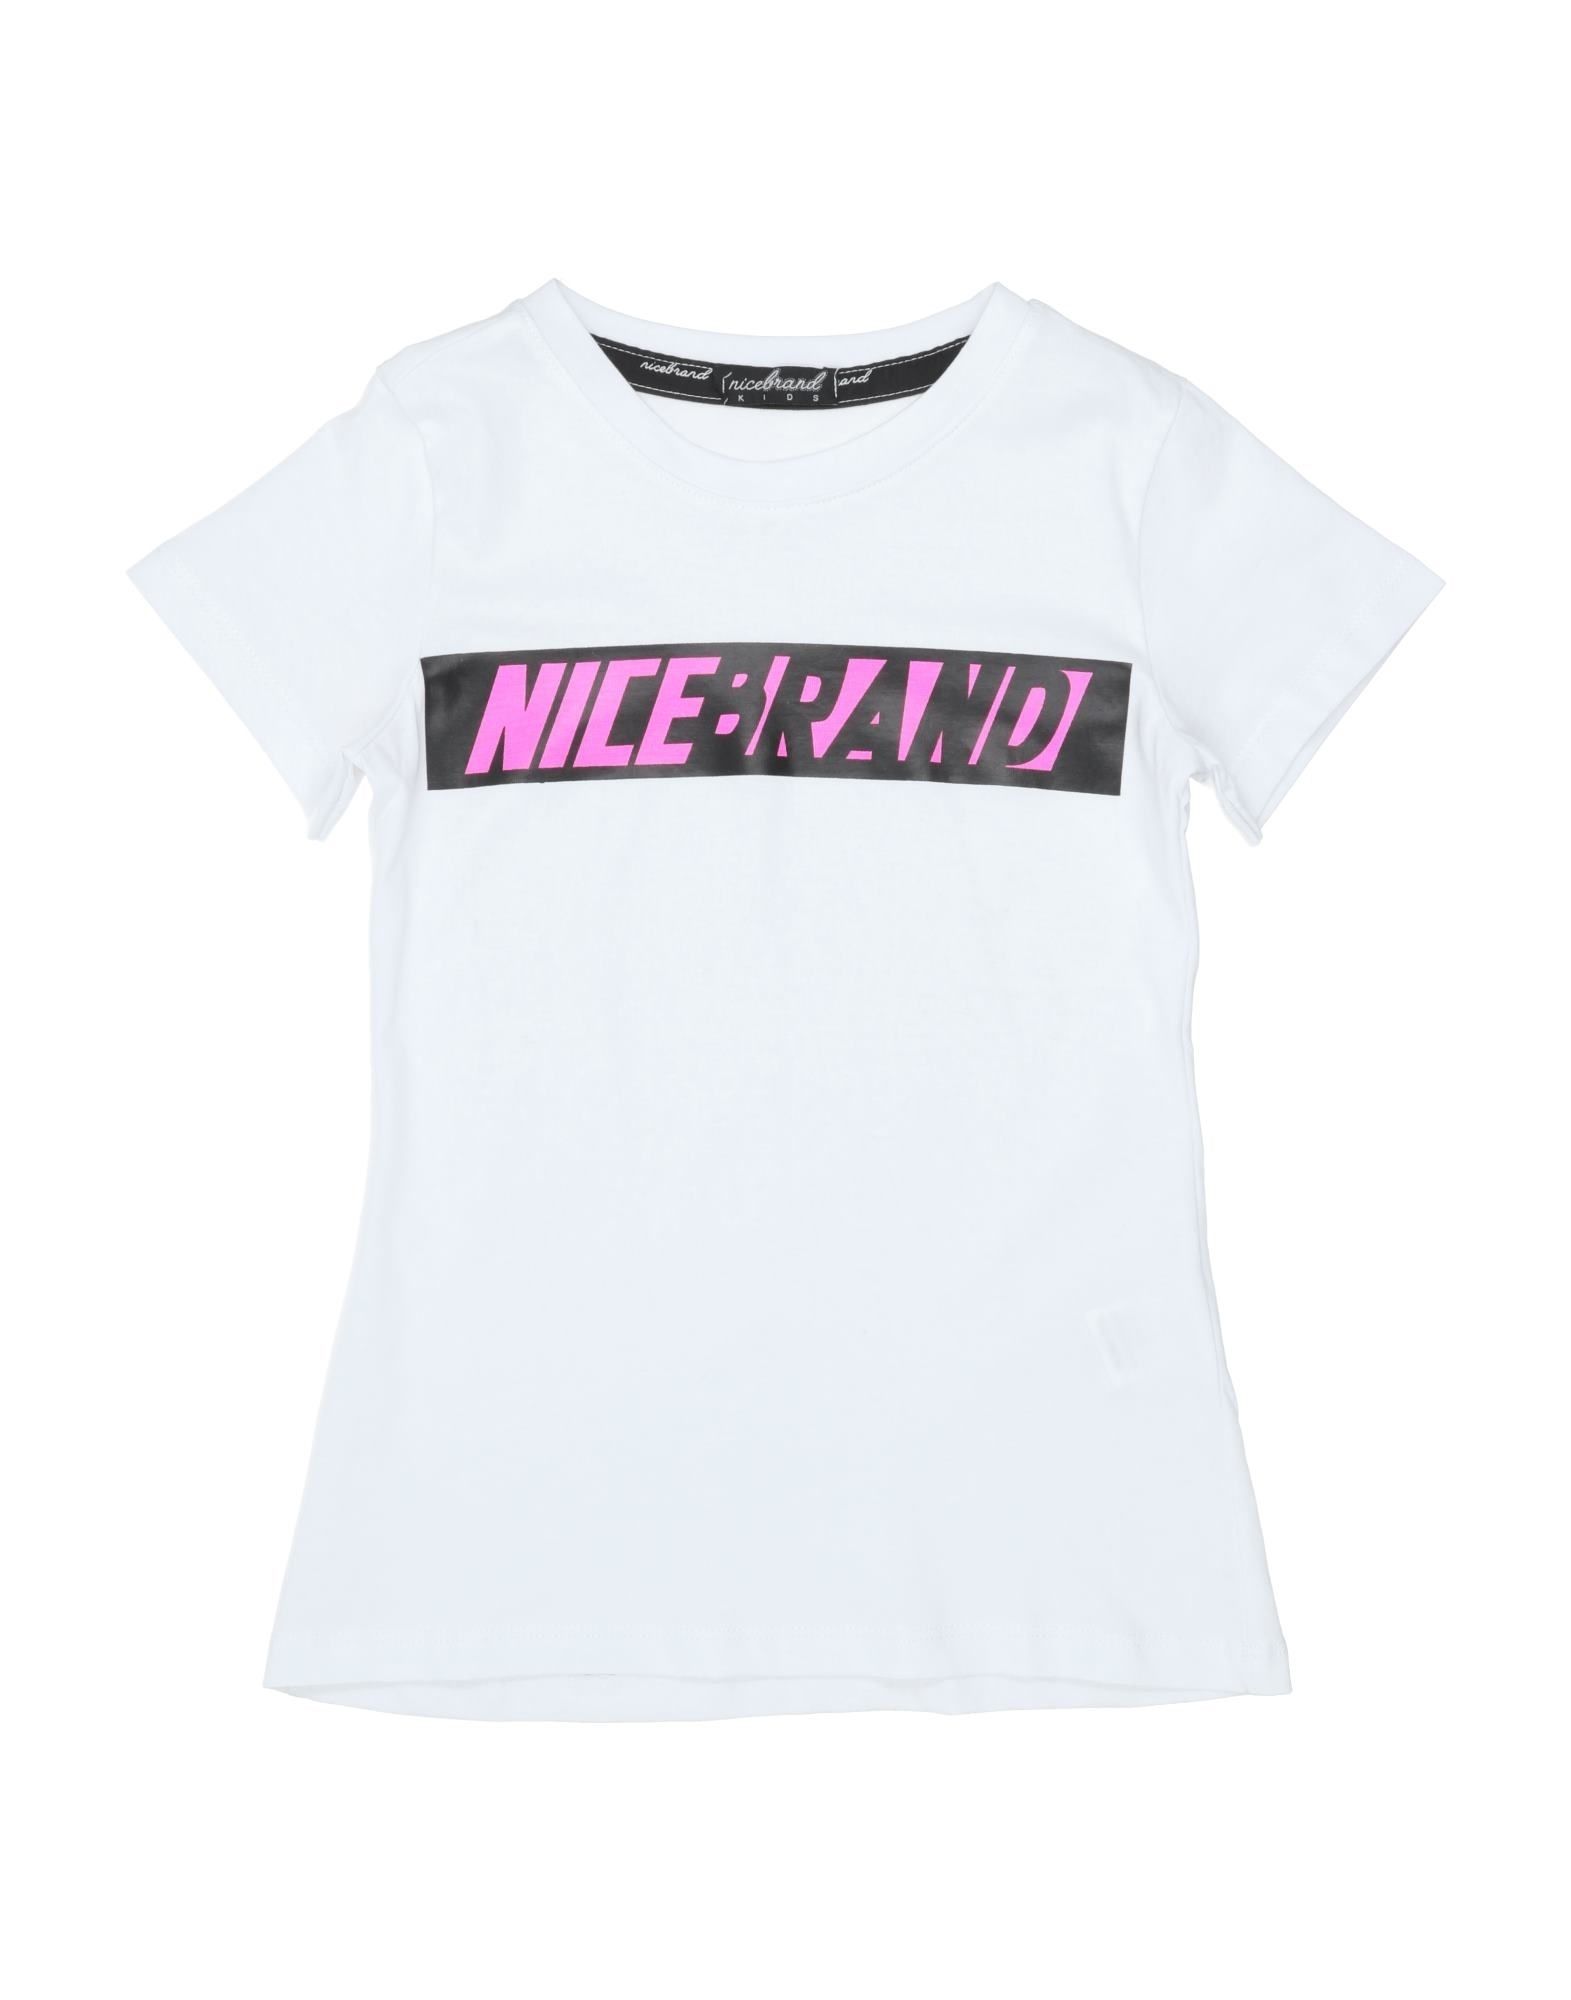 Nicebrand Kids' T-shirts In White